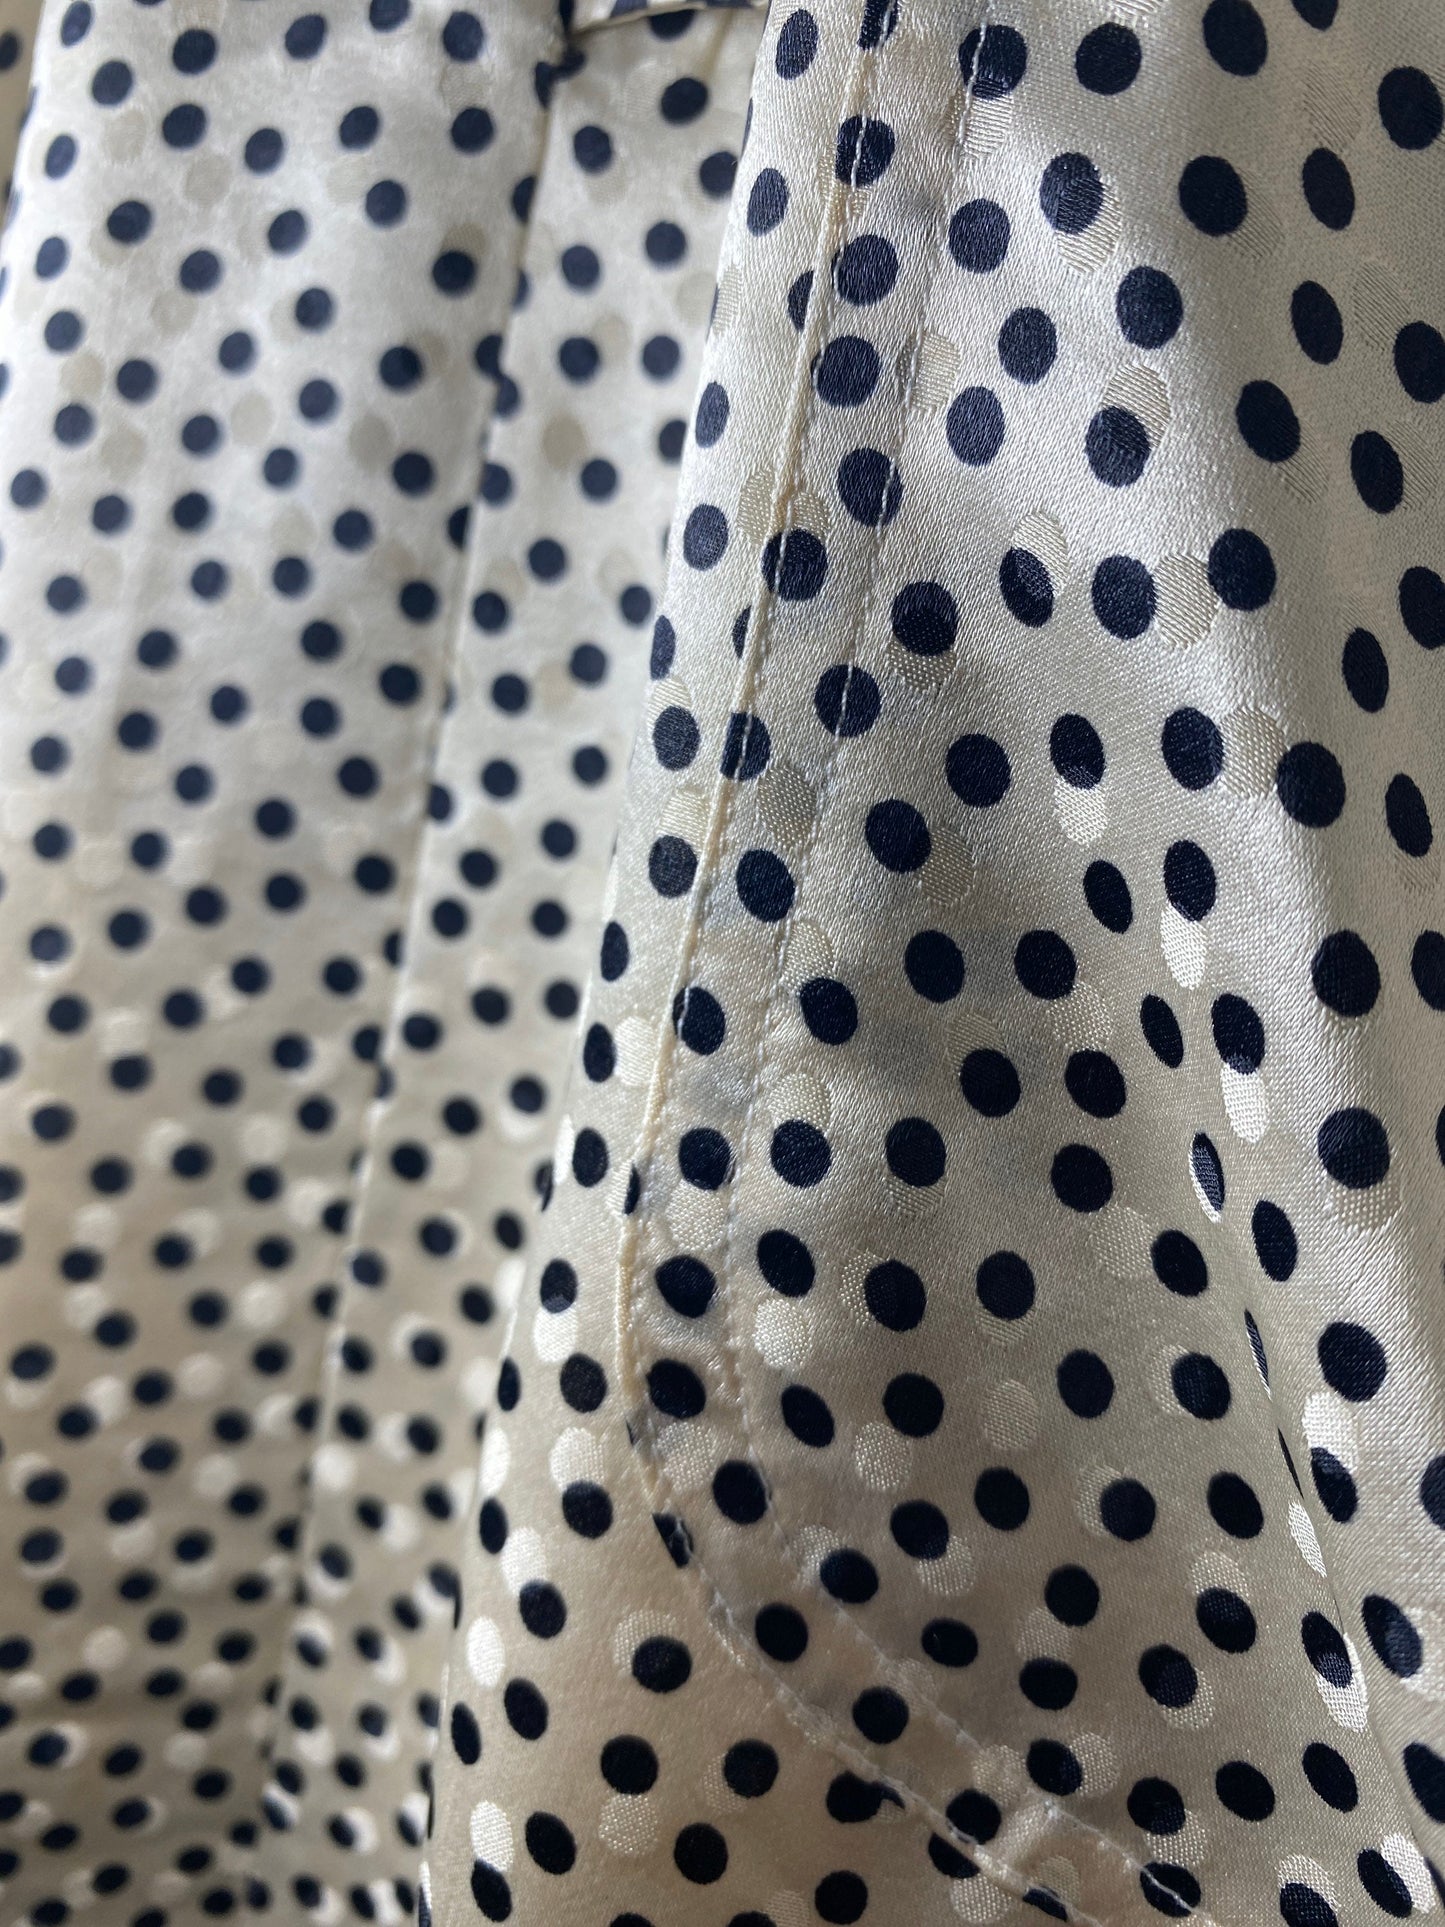 Kitai Como 60s pure silk black/white ecru polka dot blouson dress, mint condition.